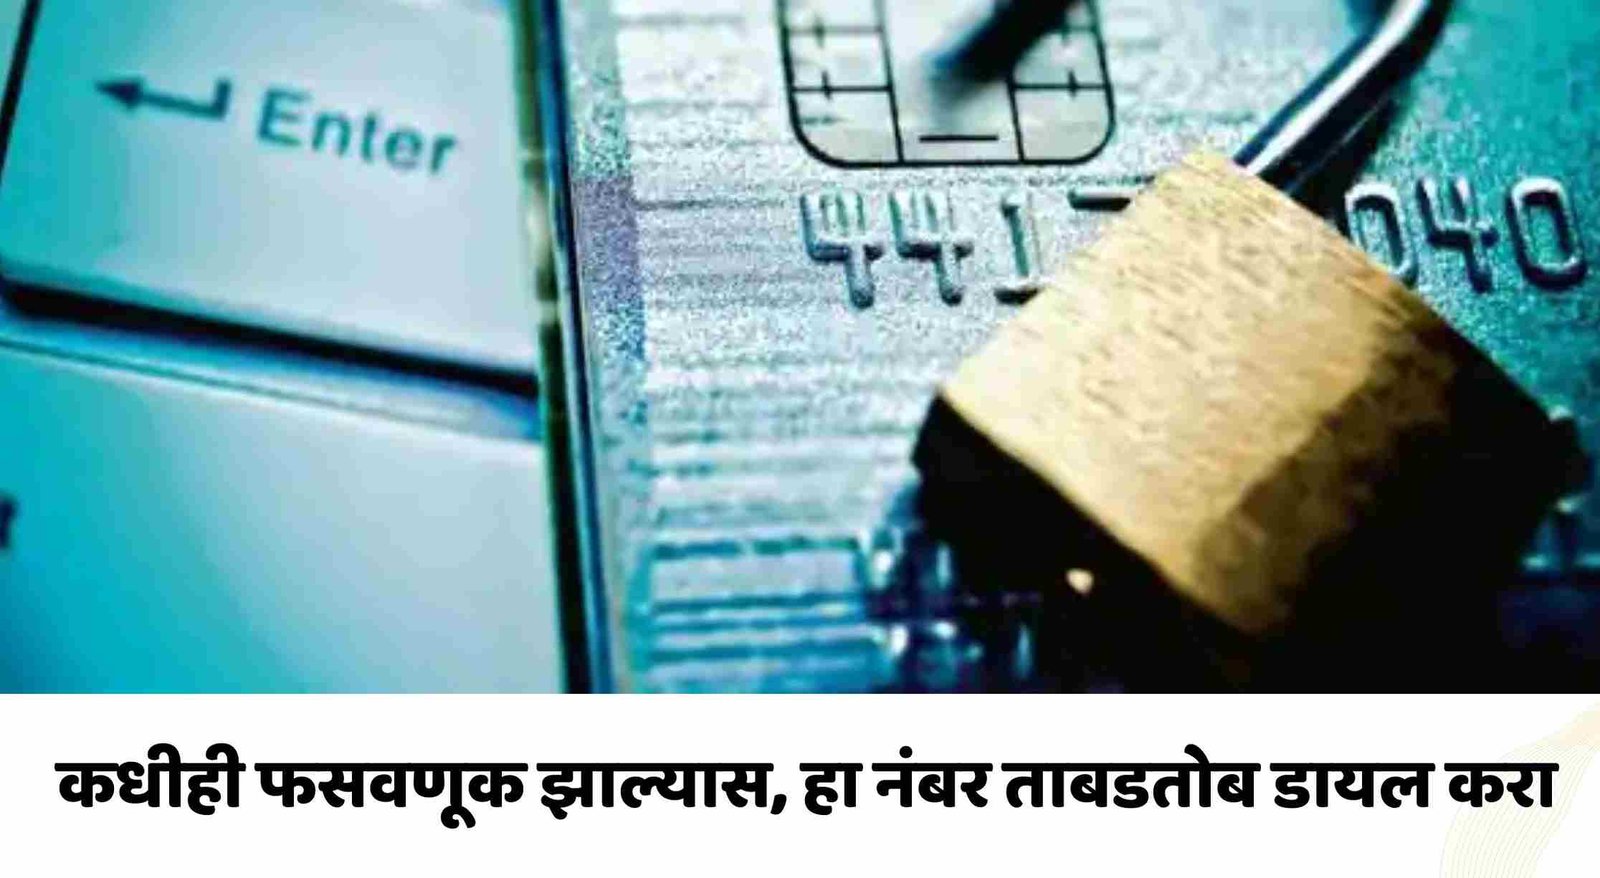 Bank Fraud Information In Marathi